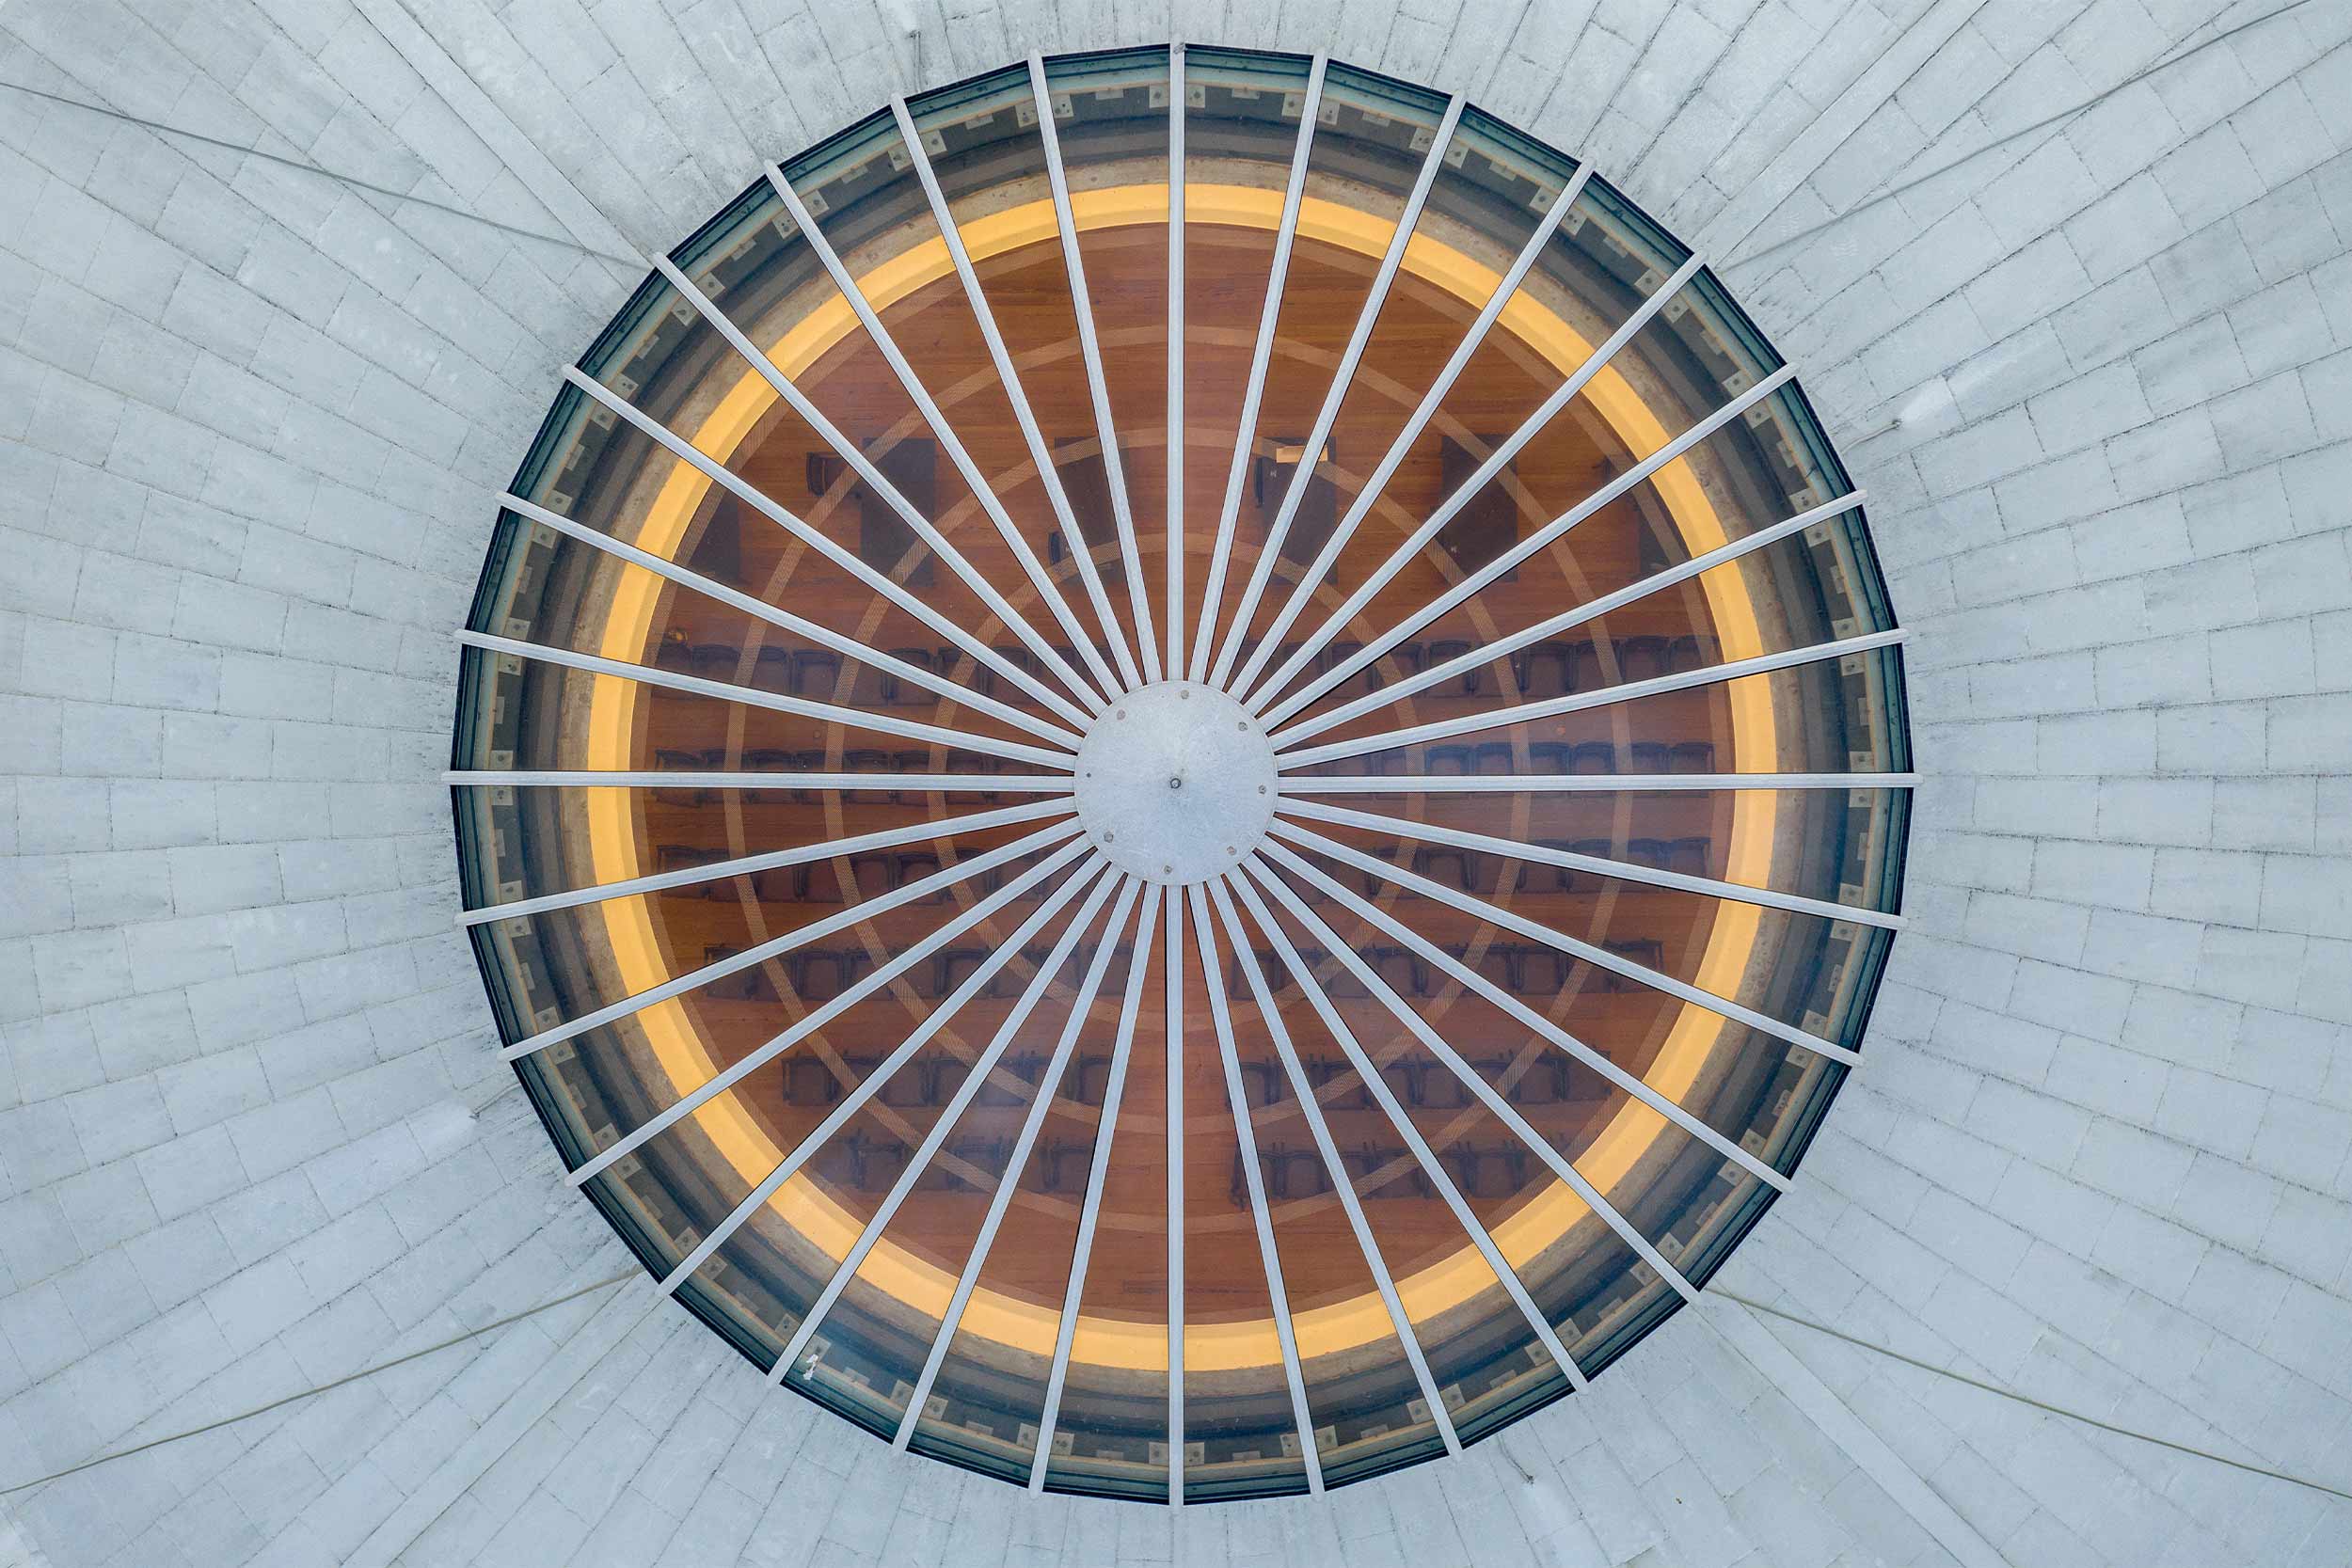 Aerial photo of the Rotunda dome oculus